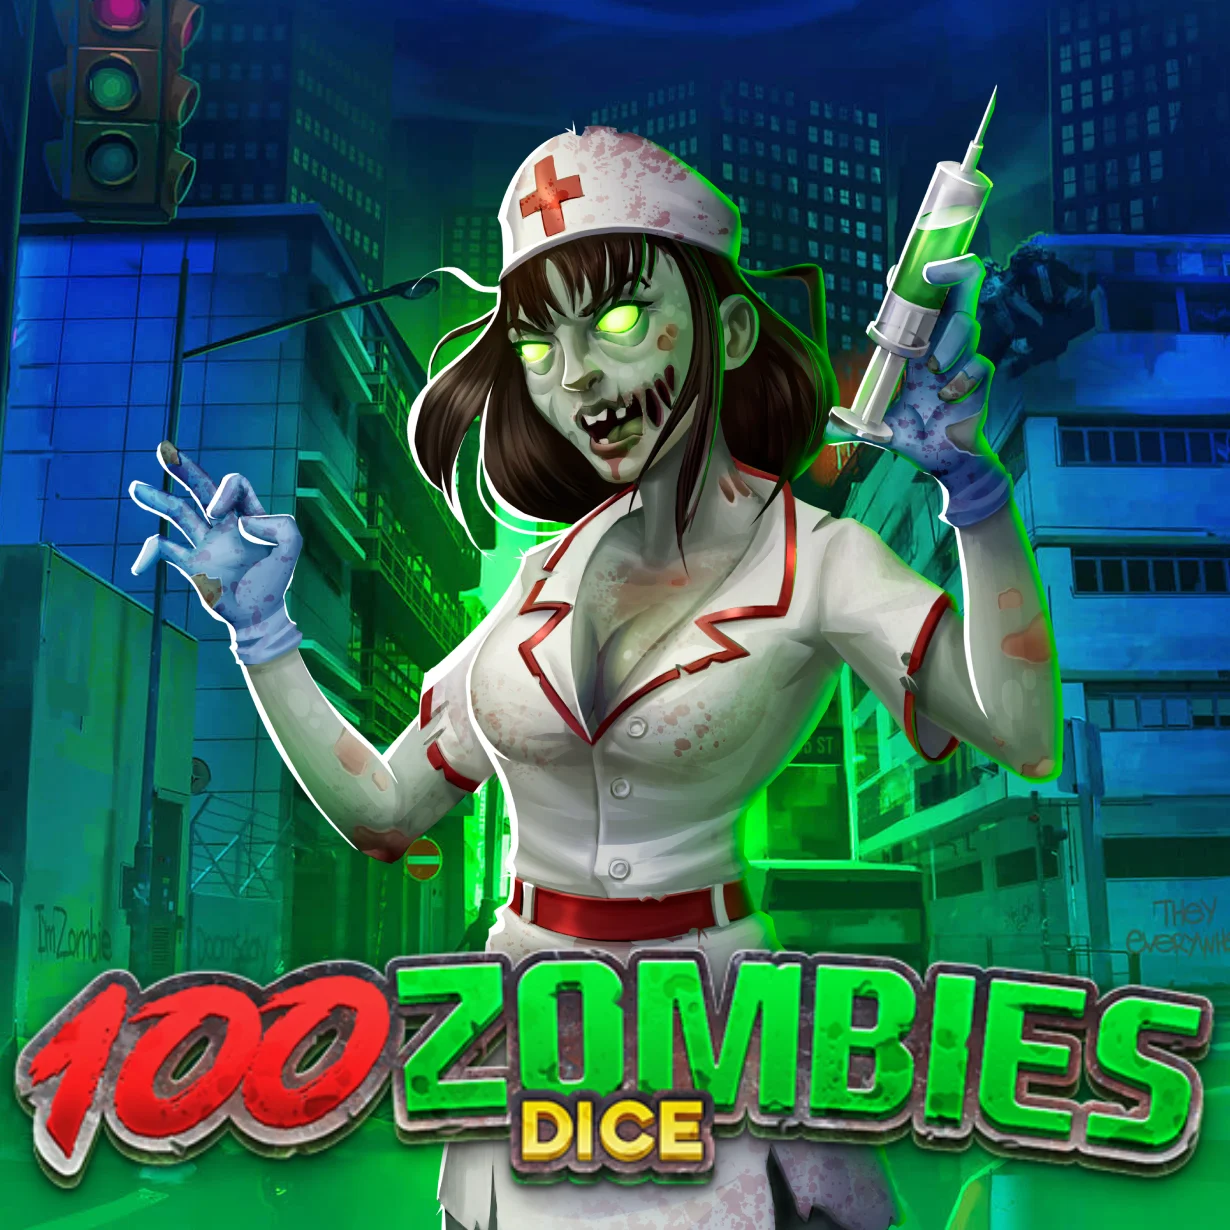 Play 100 Zombies Dice on Starcasinodice online casino